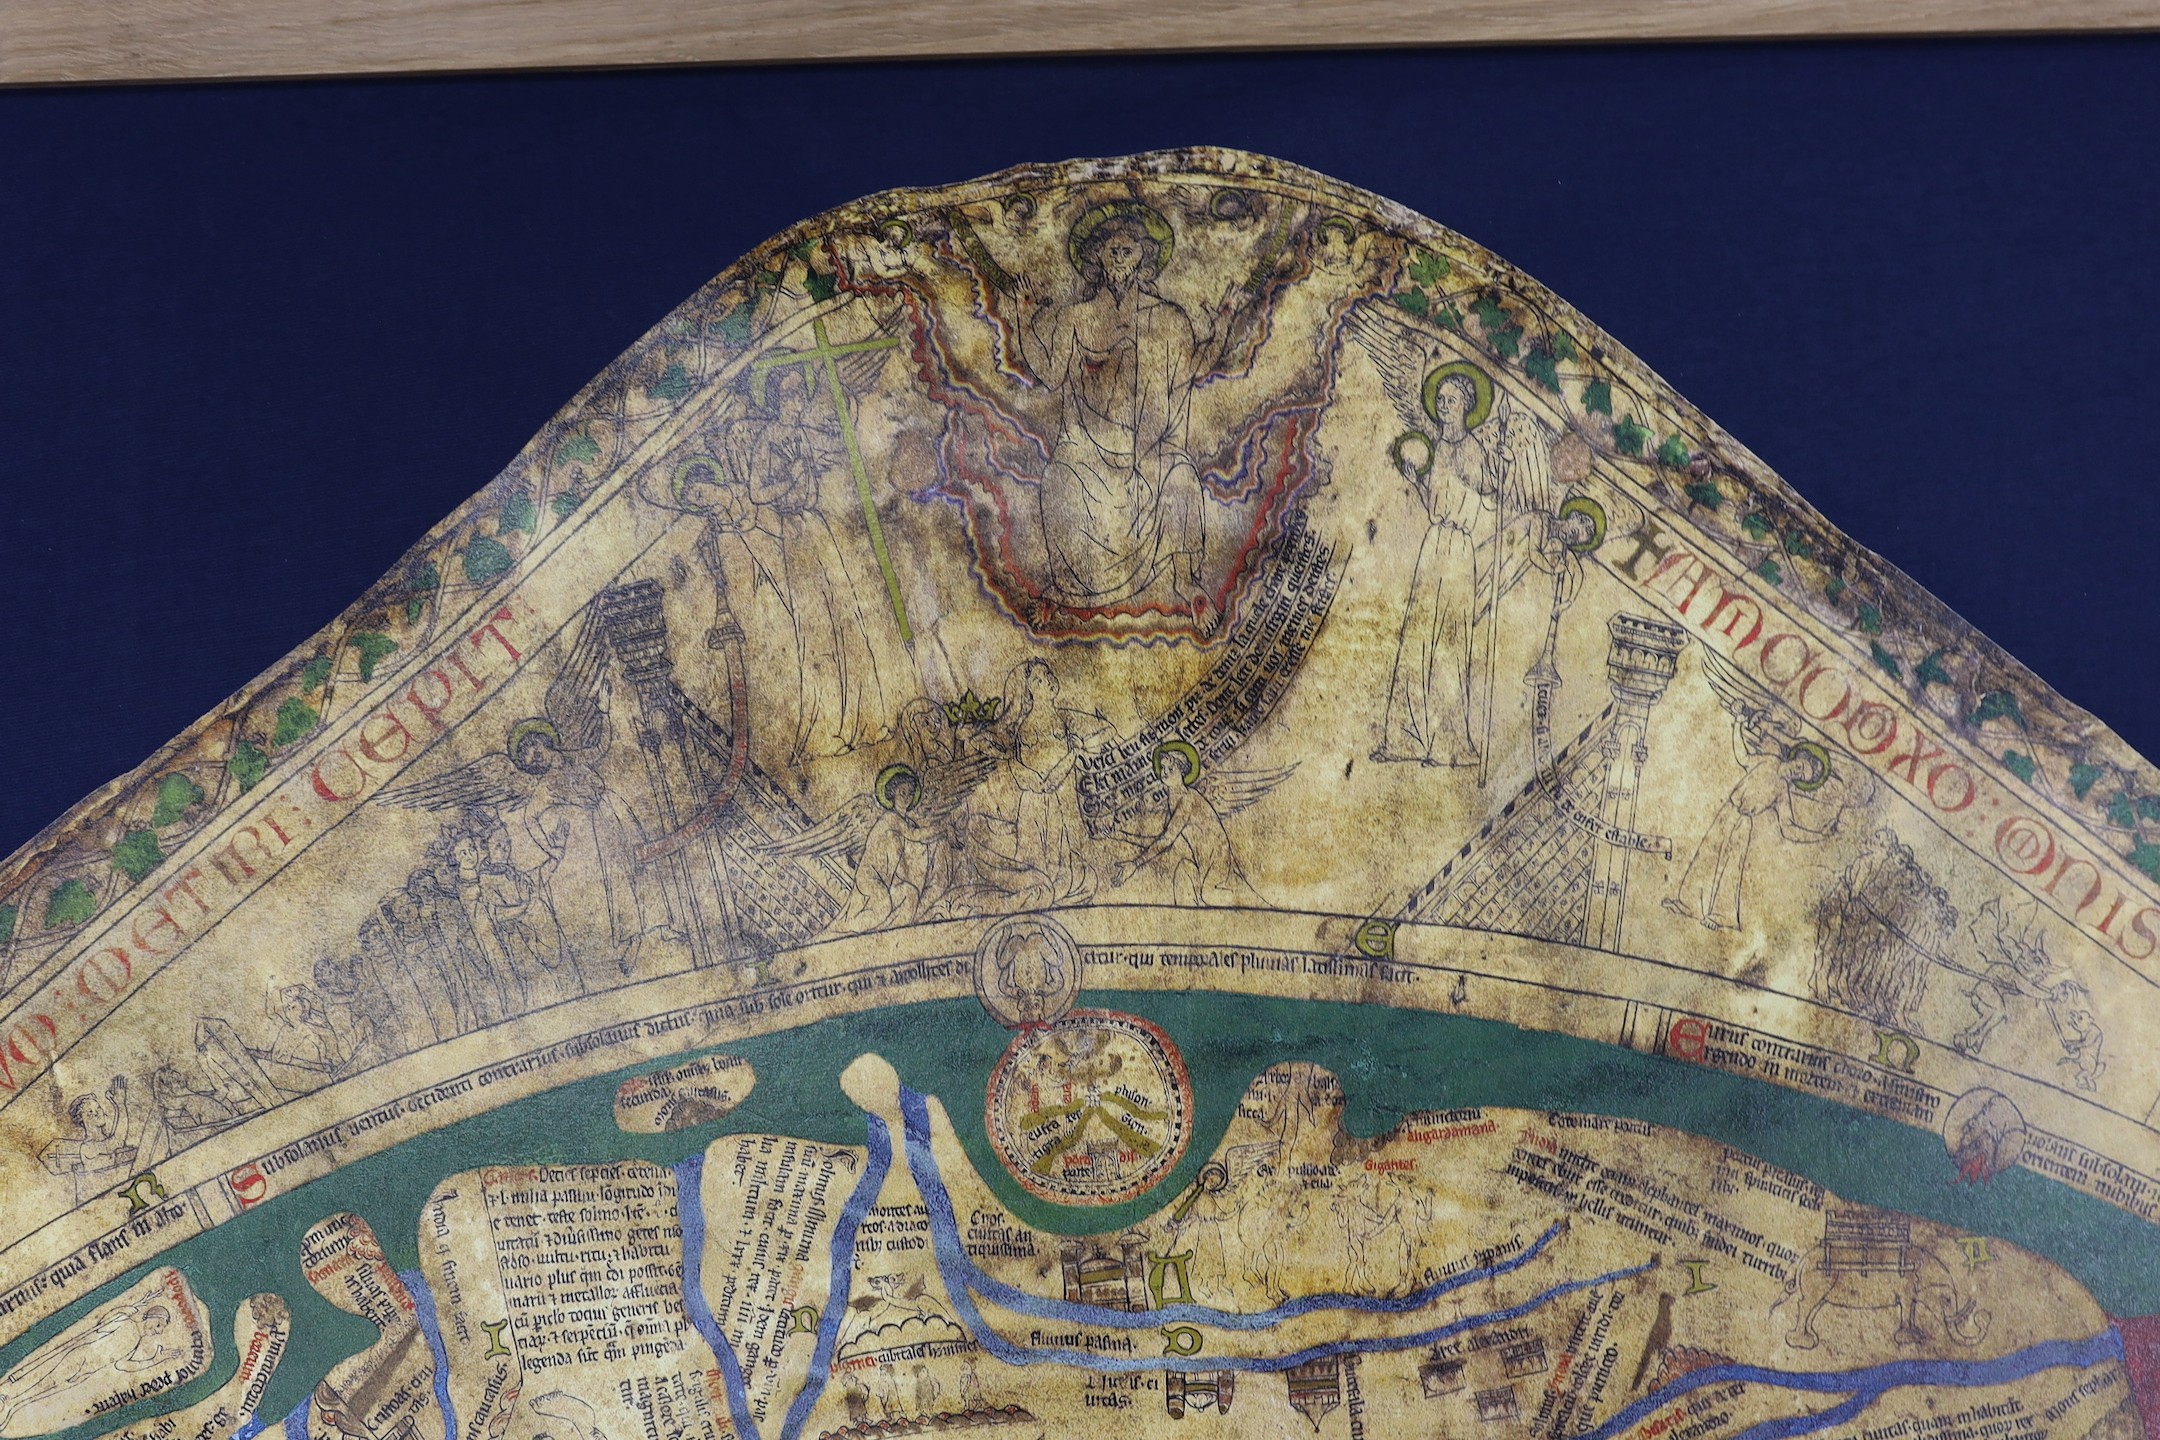 Mappa Mundi - The Hereford World Map - Image 8 of 10